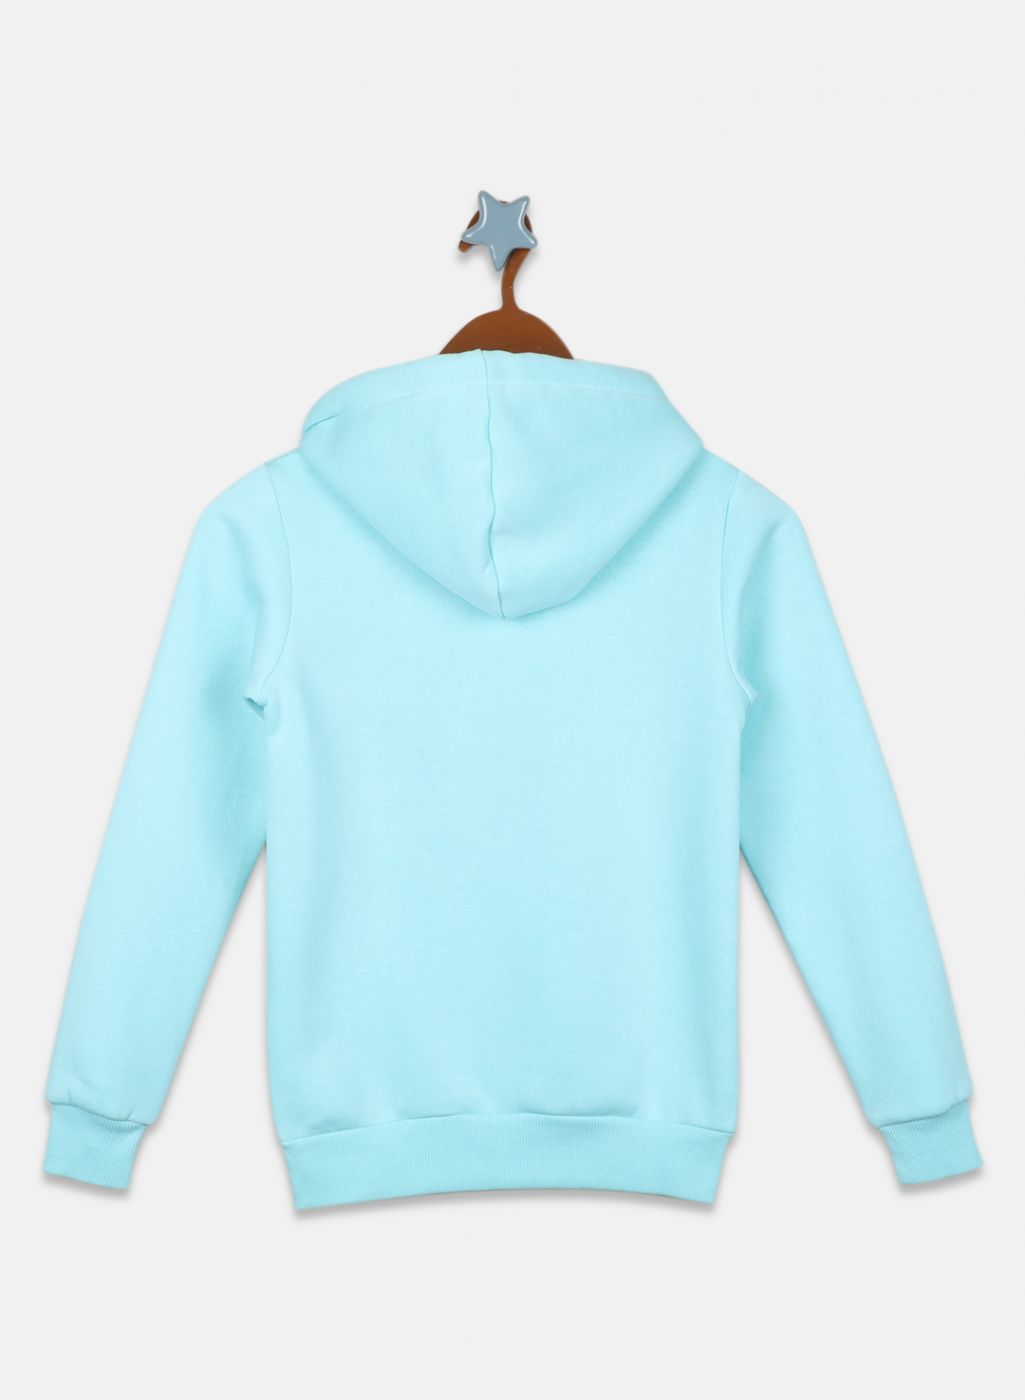 Girls Aqua Blue Printed Sweatshirt